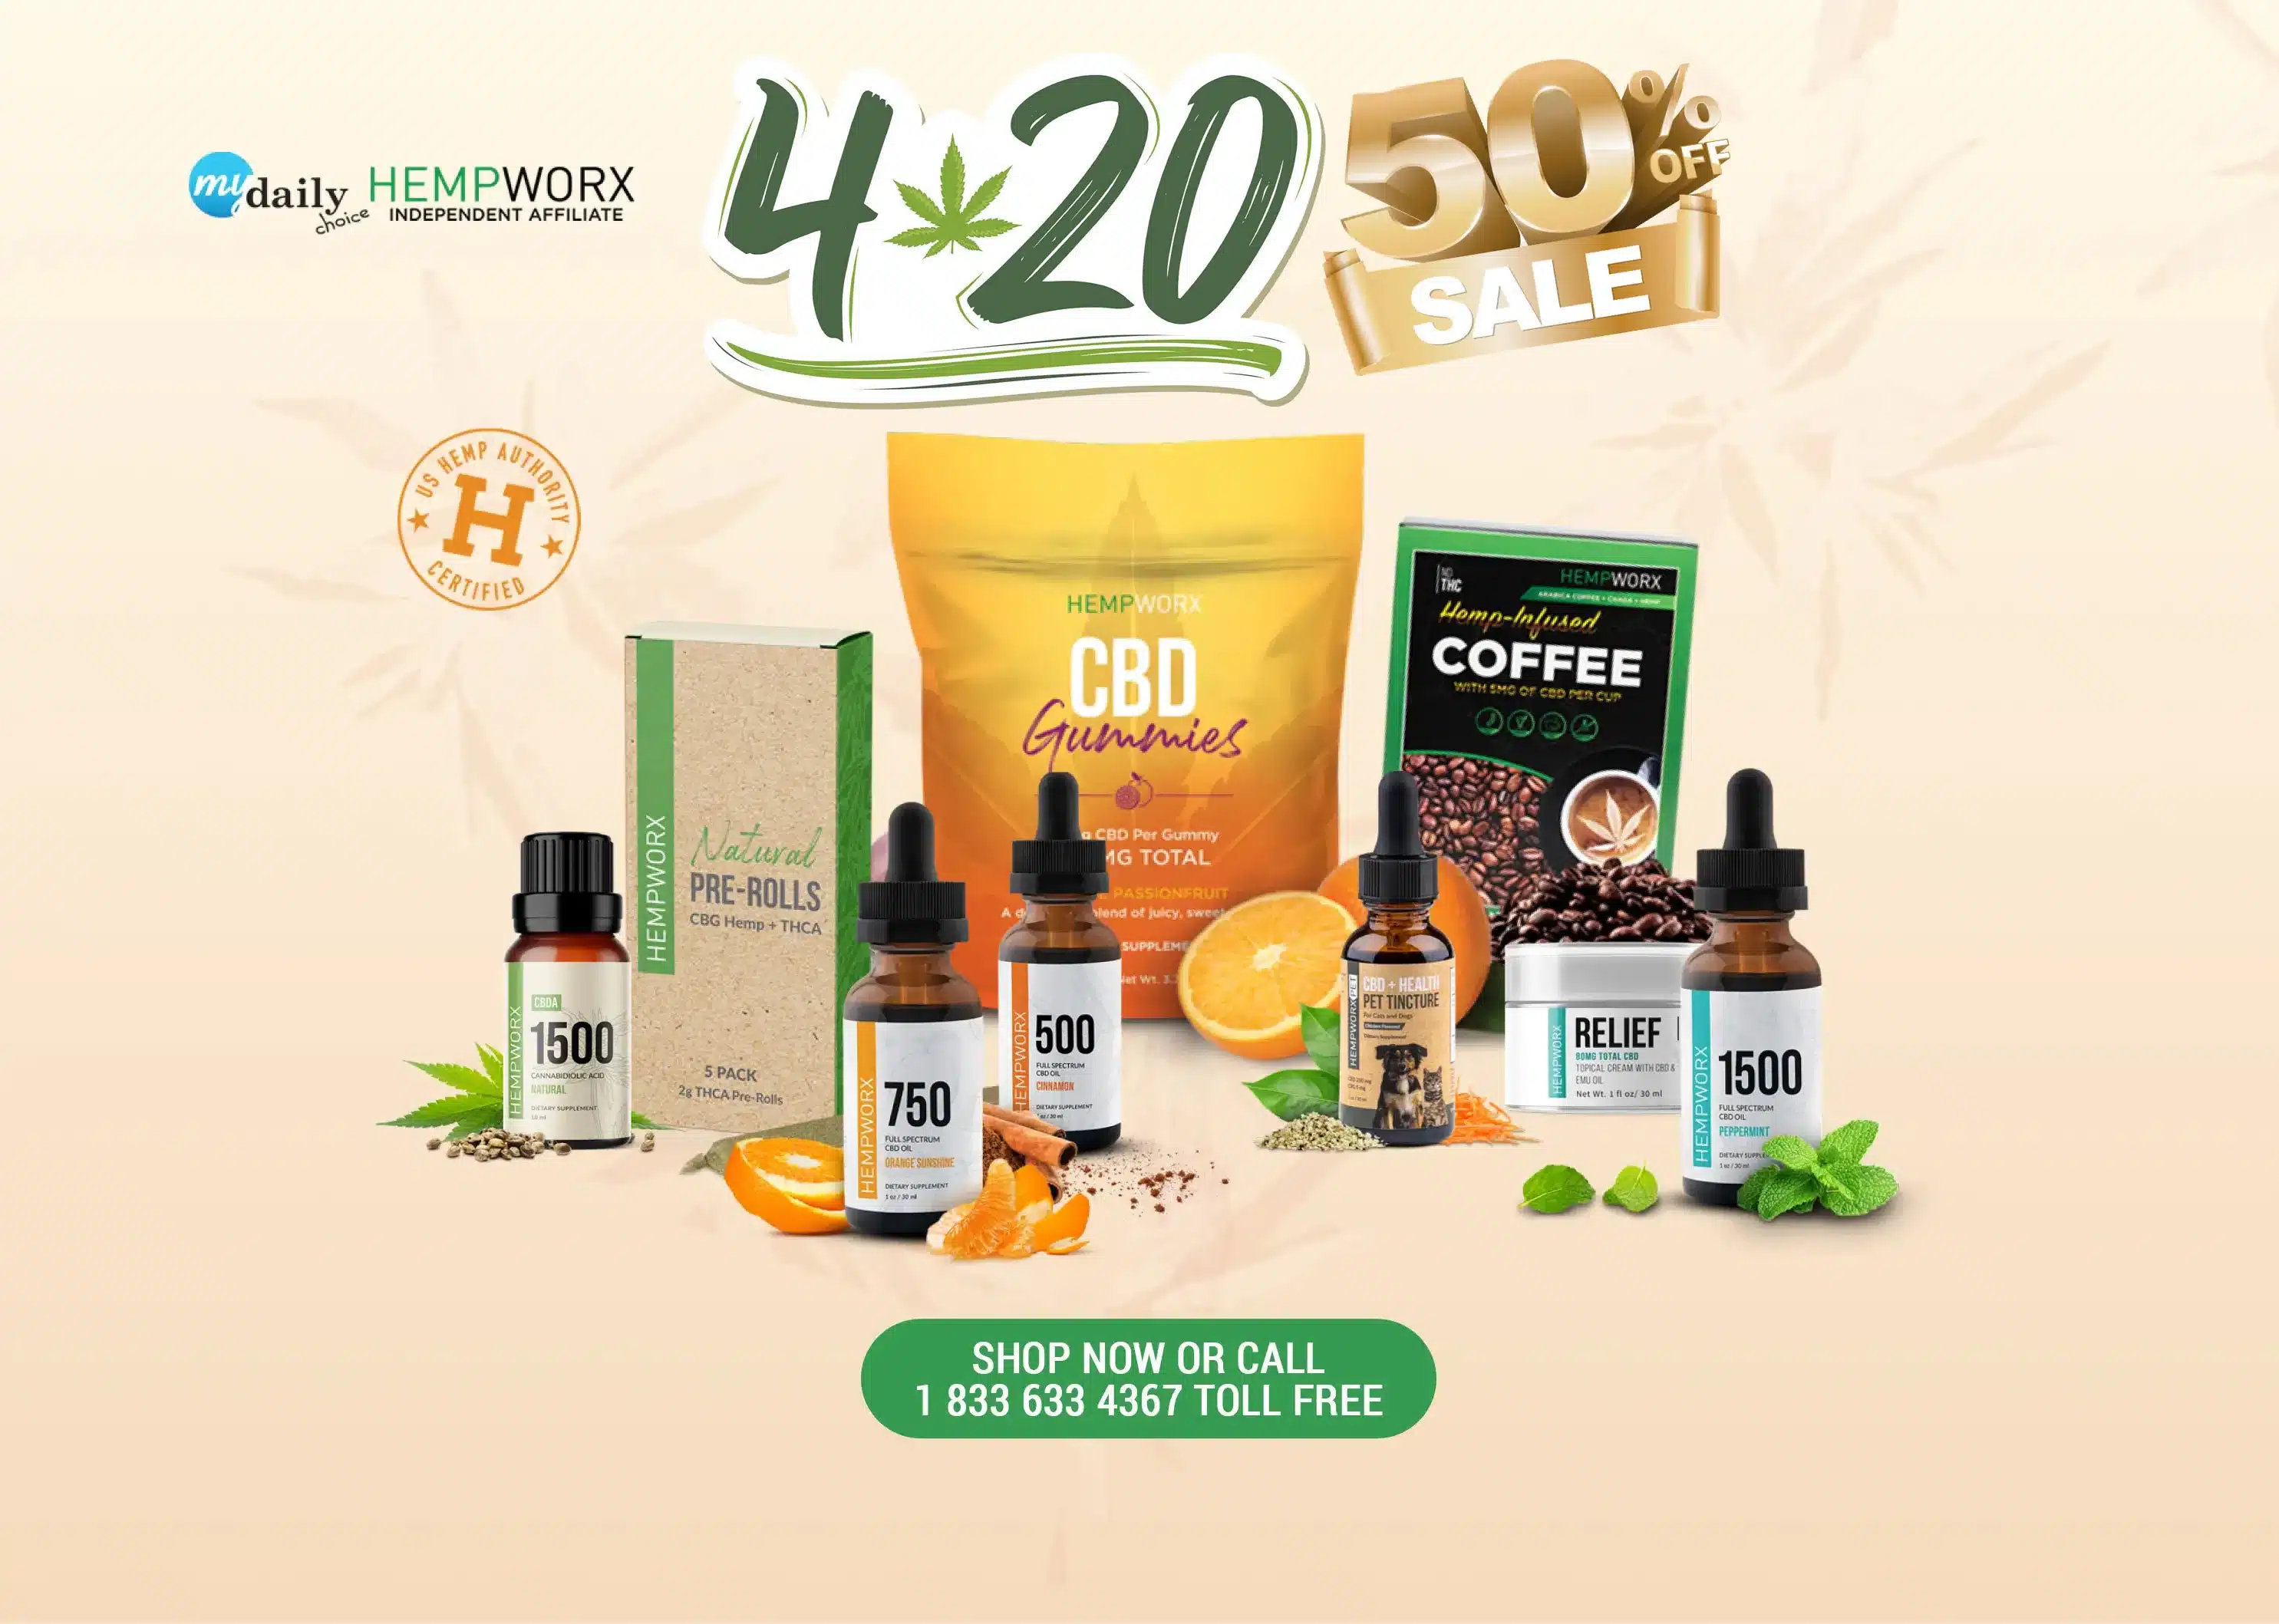 Hempworx CBD Online, Hempworx products, Hempworx 420 Sale